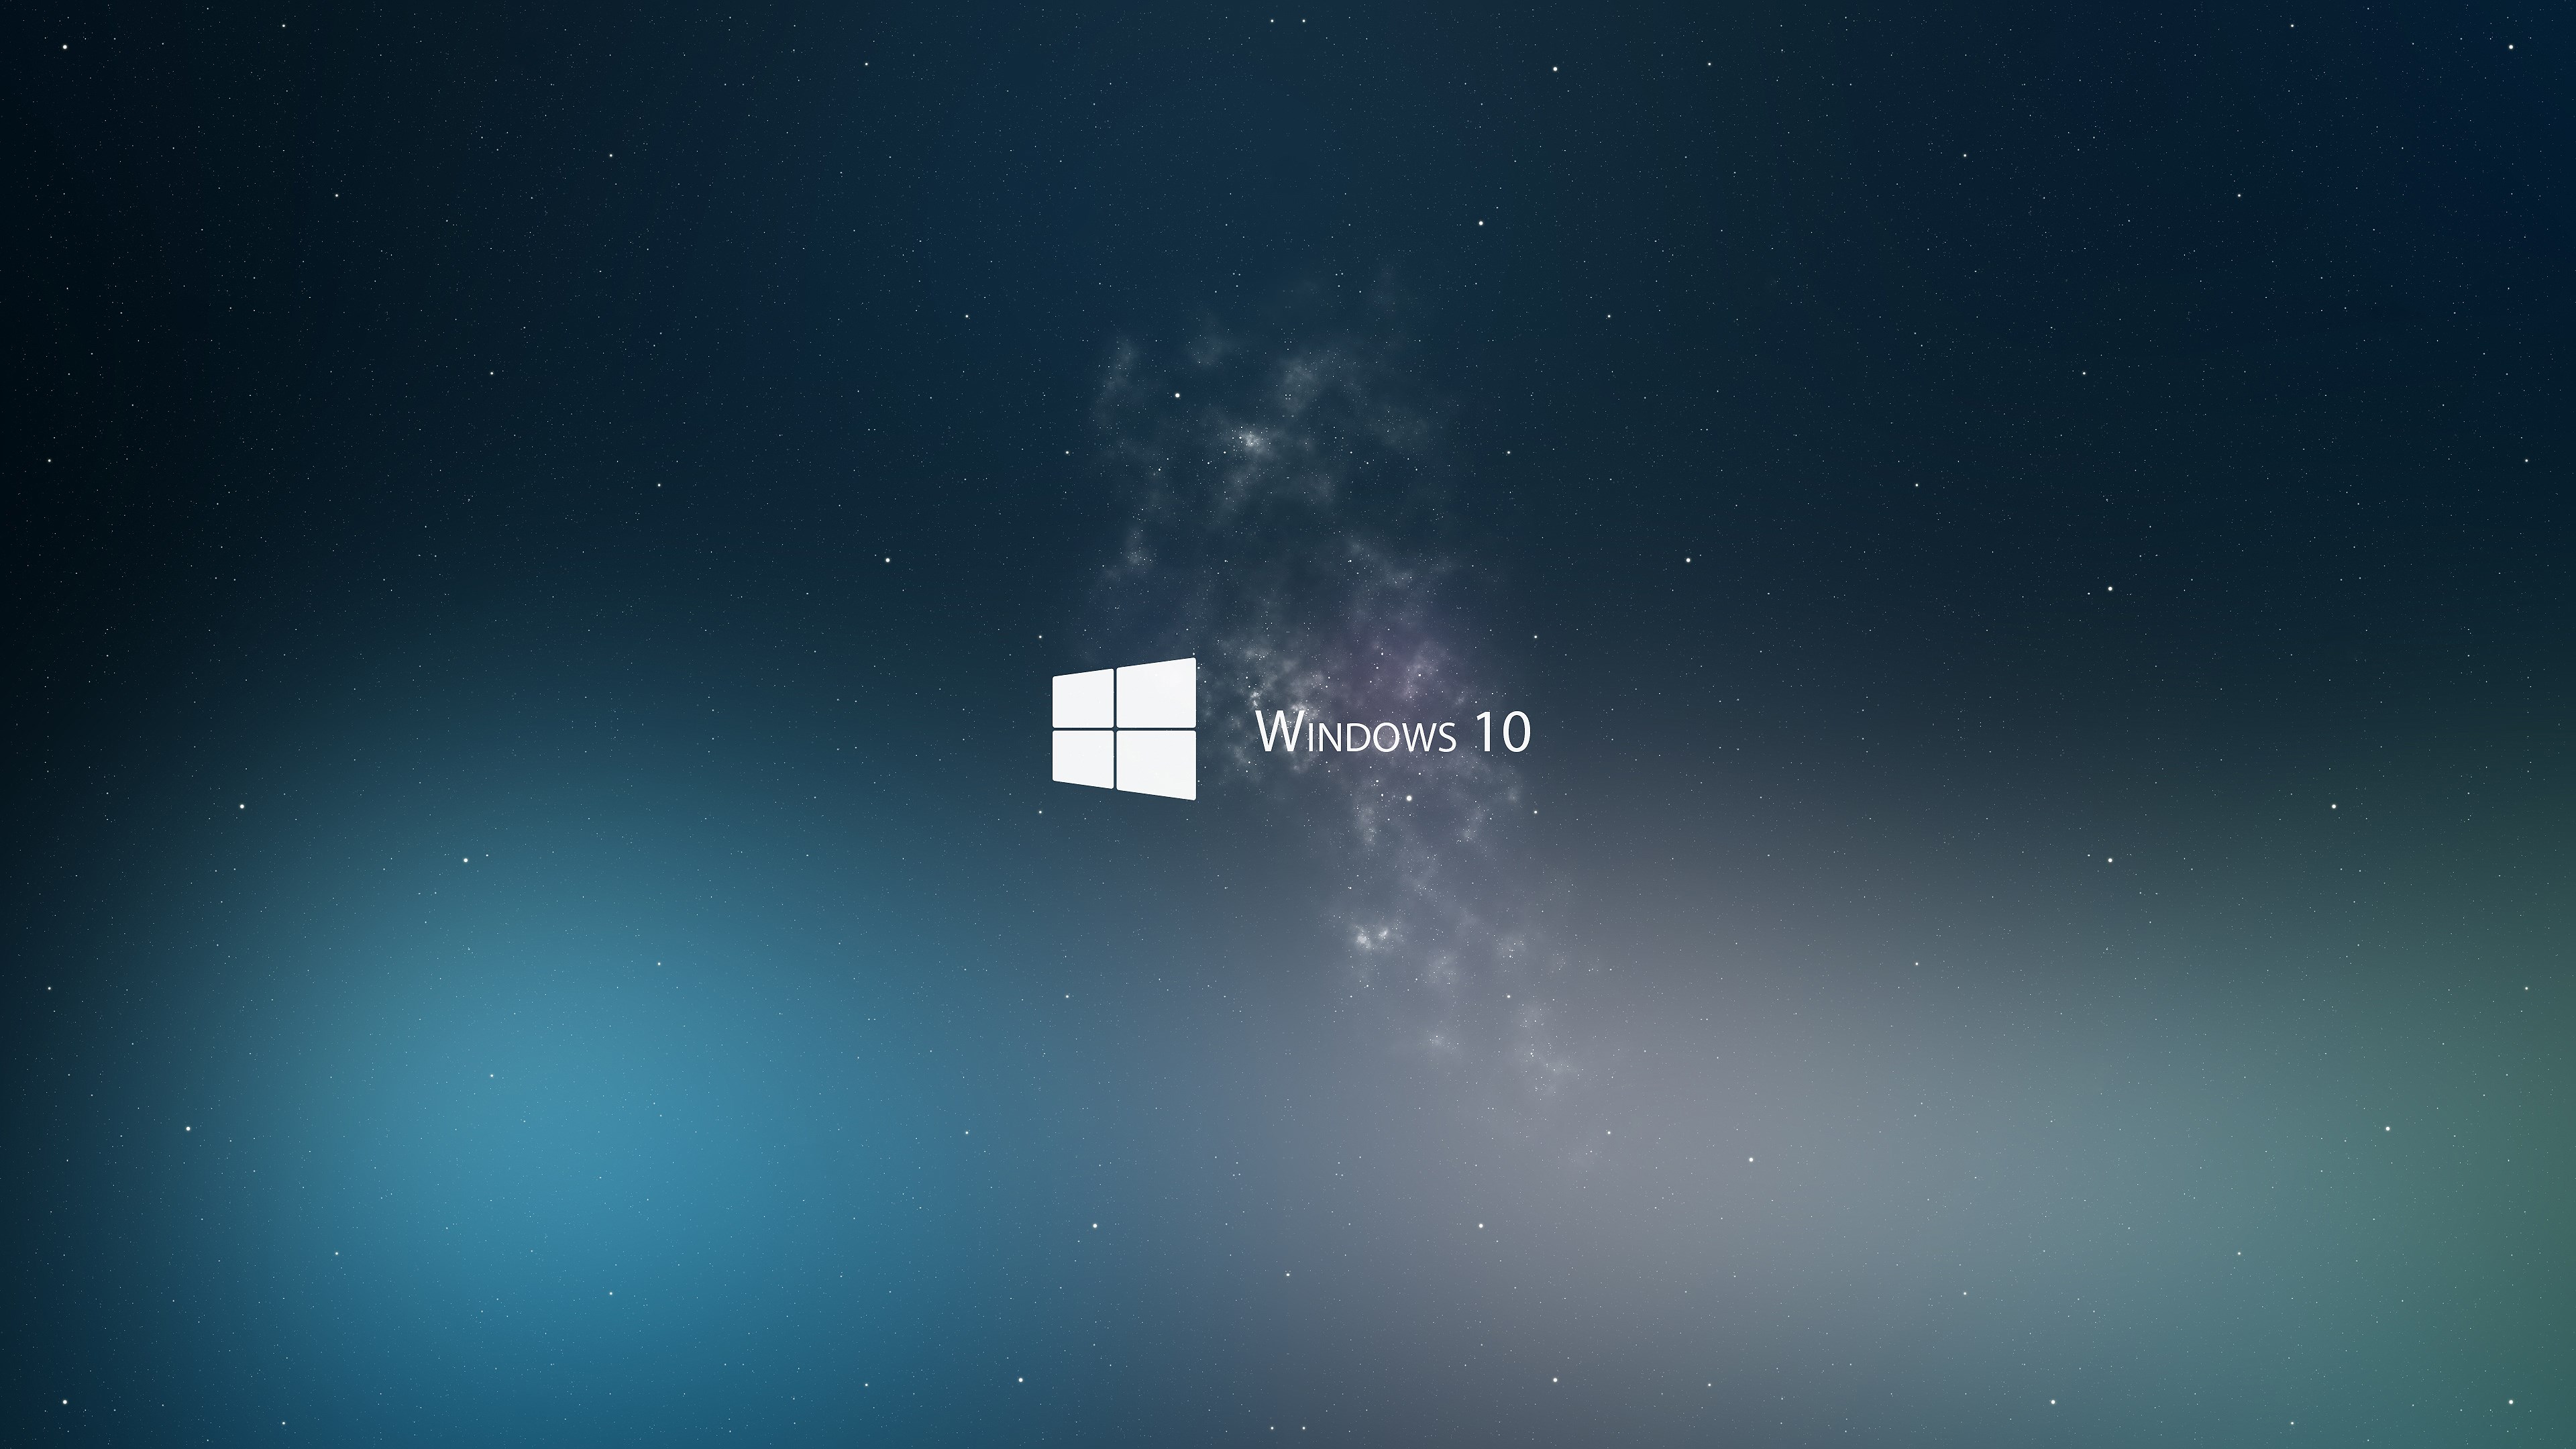 Windows 10 4K Ultra HD Wallpaper [3840x2160]